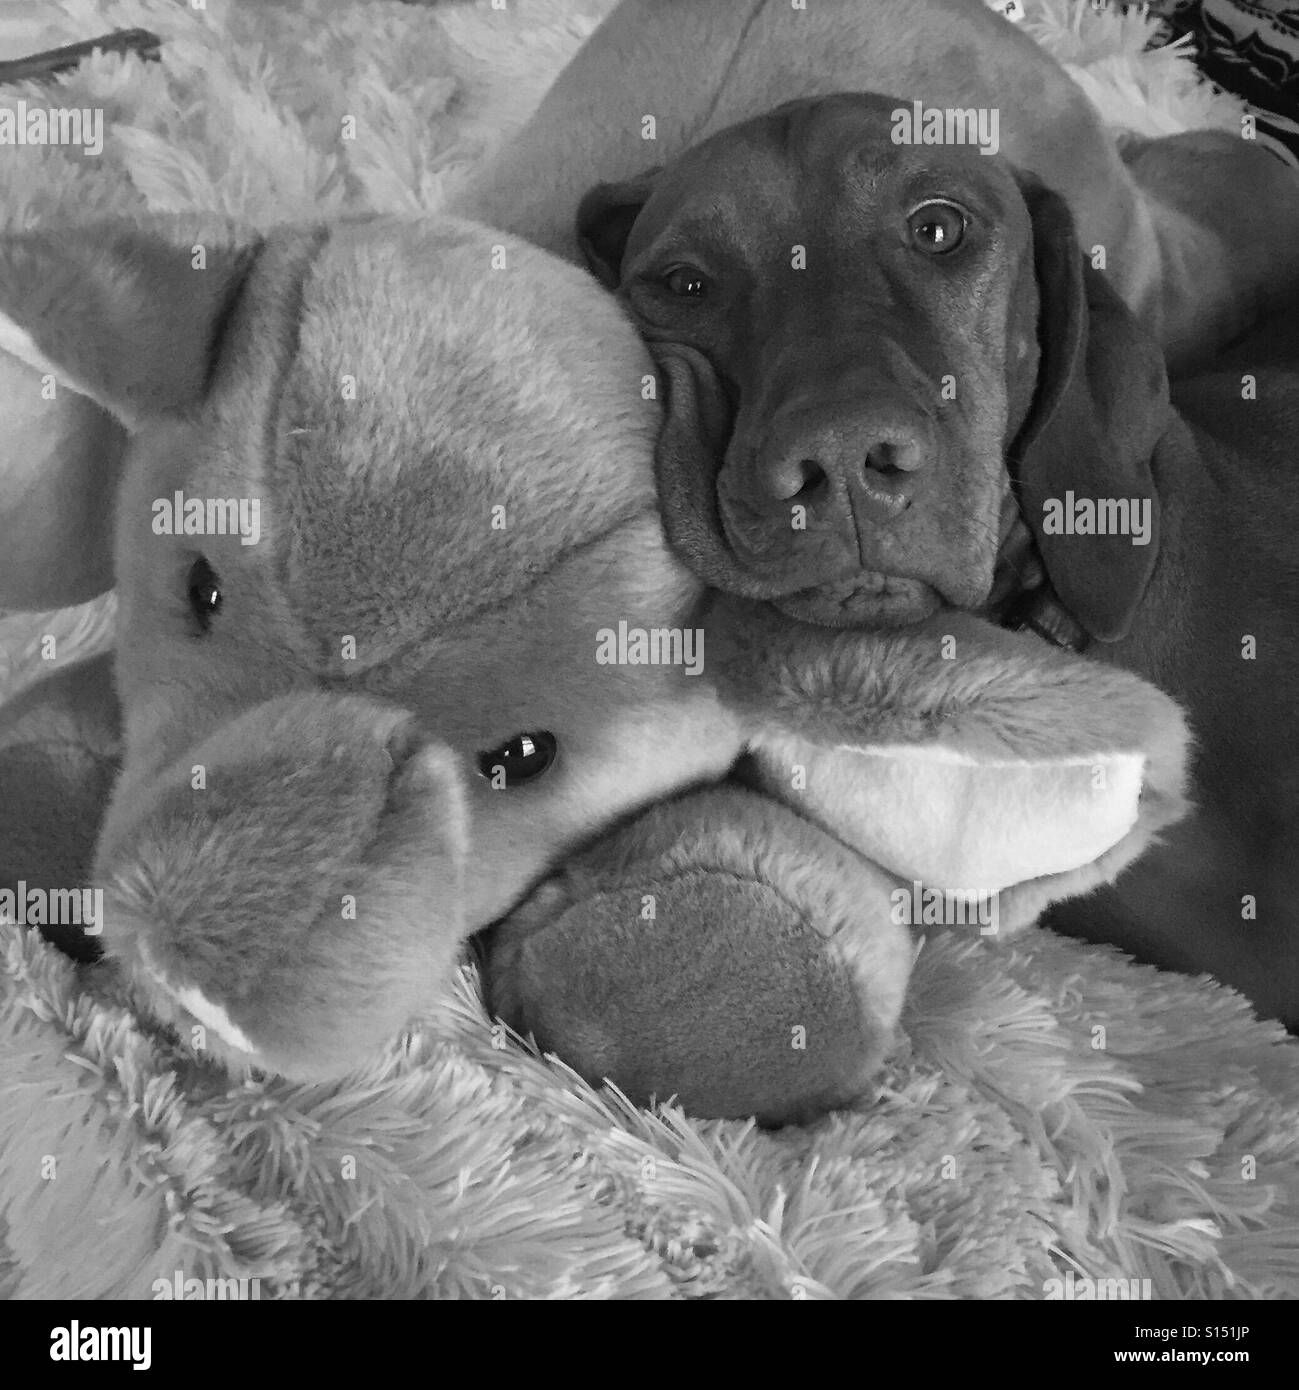 Dog cuddling with stuffed animal Stock Photo